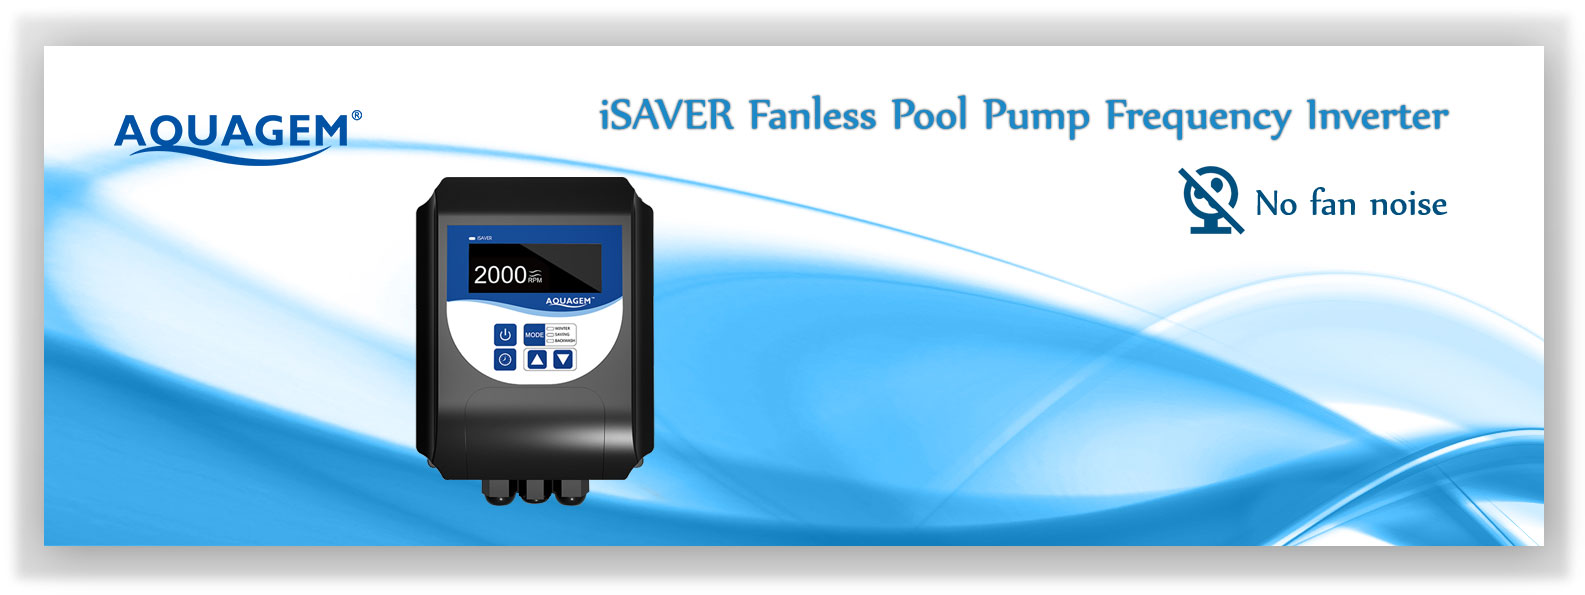 iSAVER Fanless Pool Pump Frequency Inverter - Aquagem